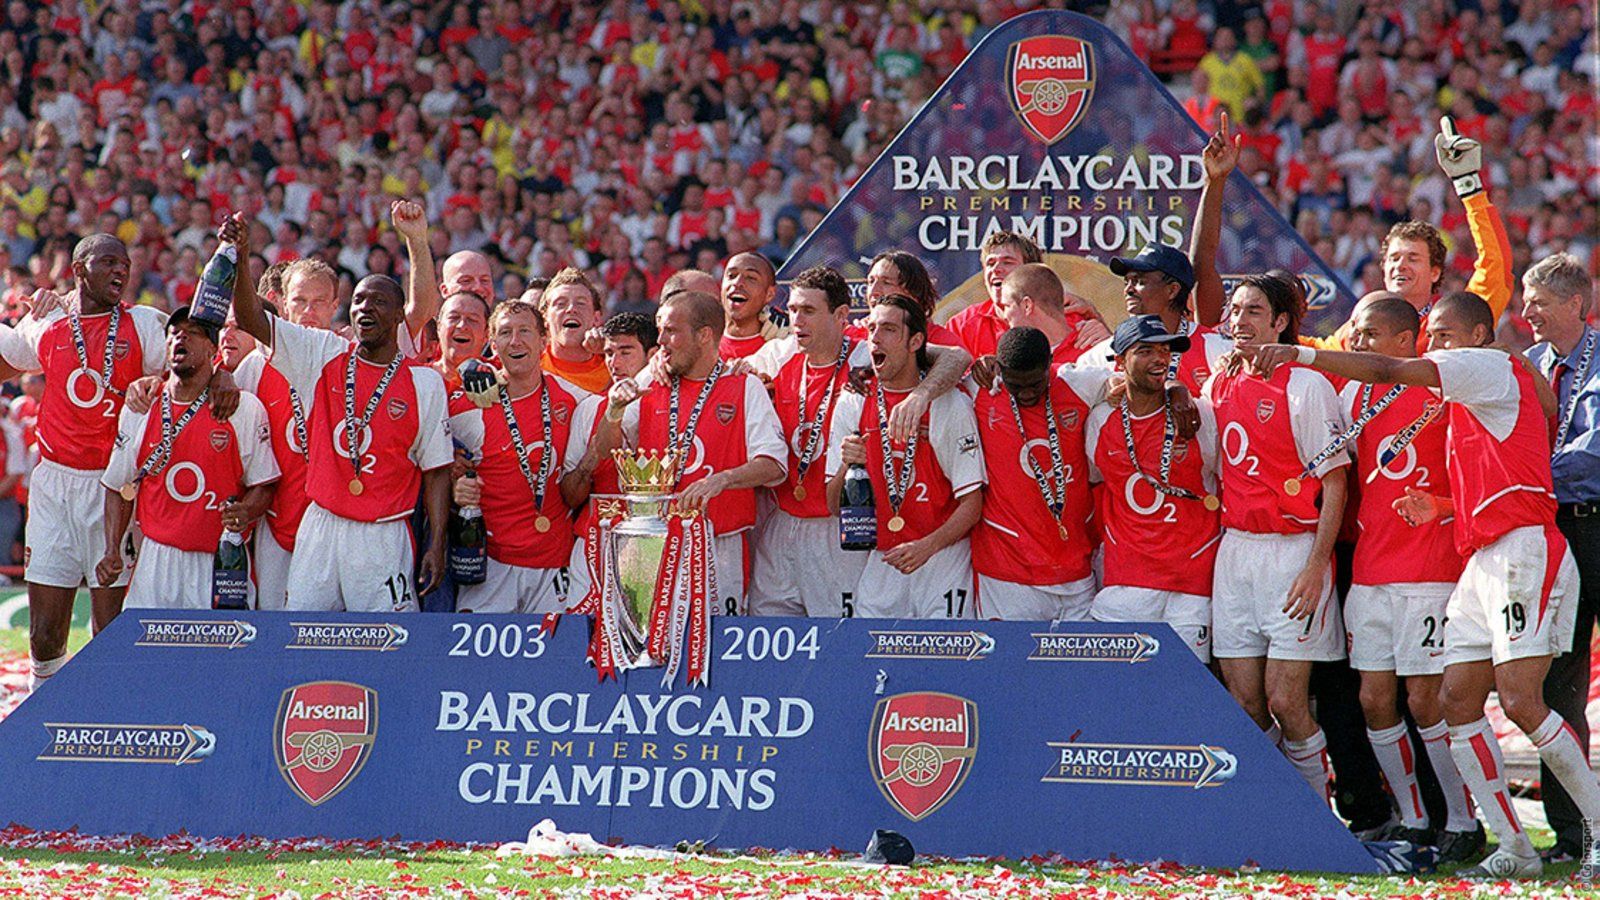 Honours | History | News | Arsenal.com